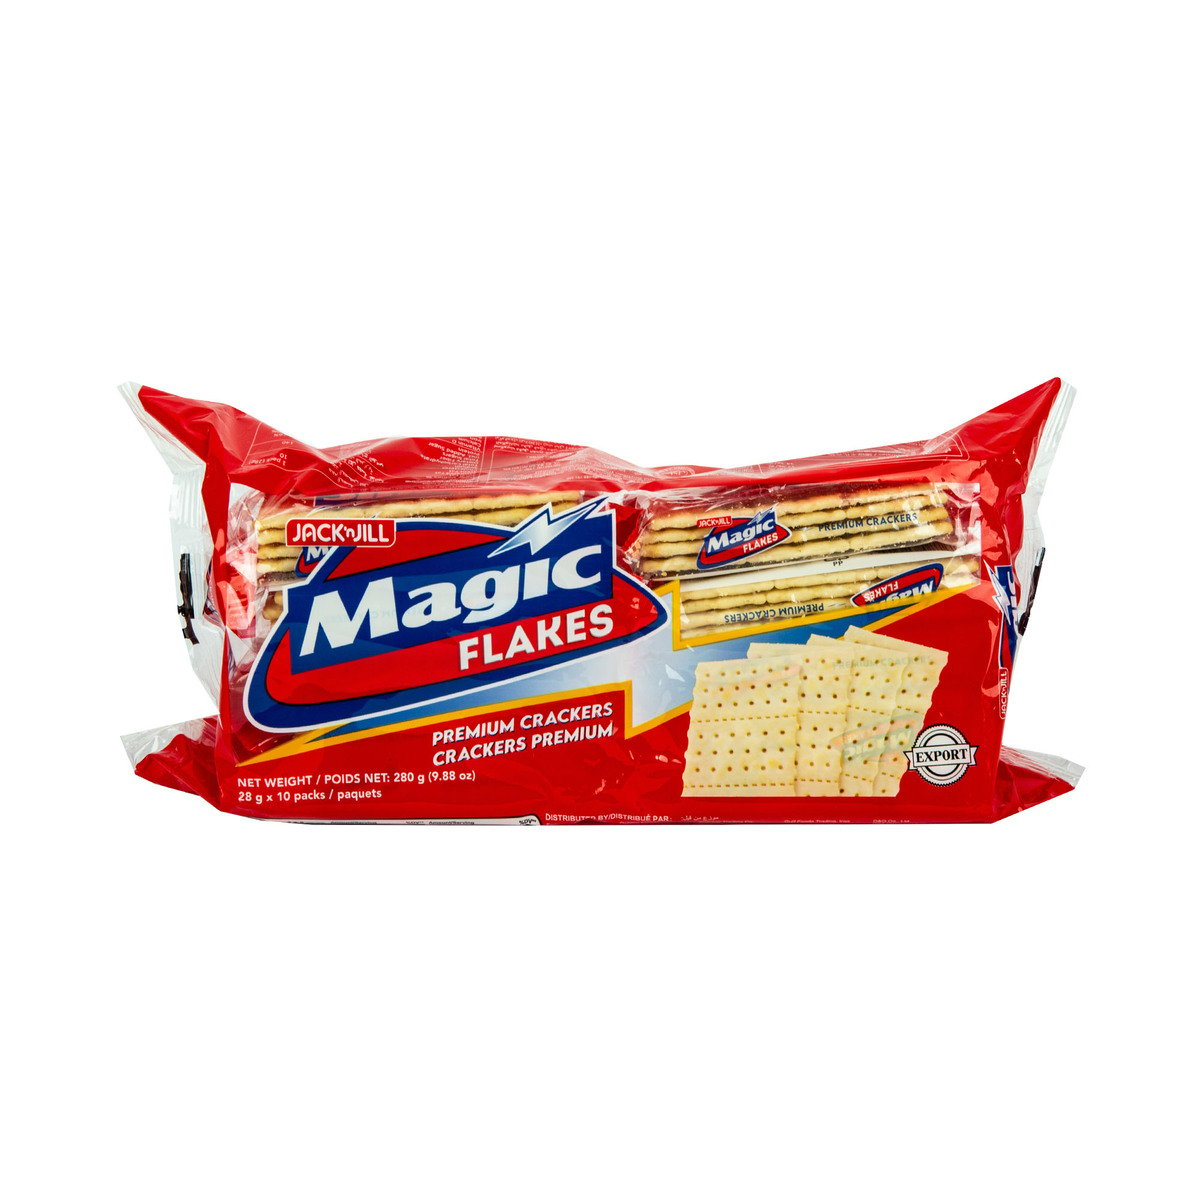 Jack 'n Jill Magic Flakes Premium Crackers 10 x 28 g